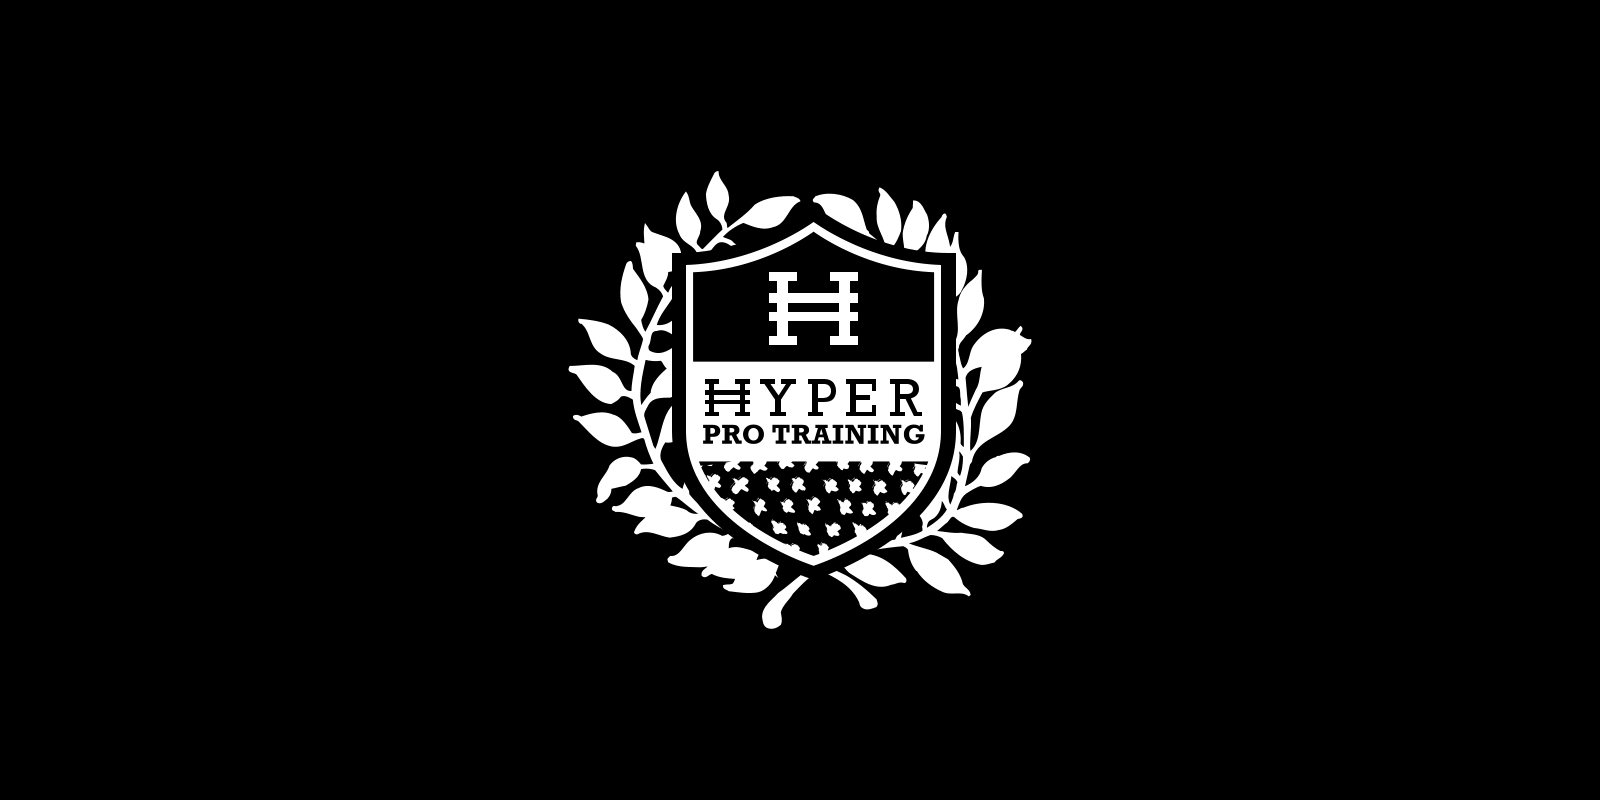 (c) Hyperprotraining.com